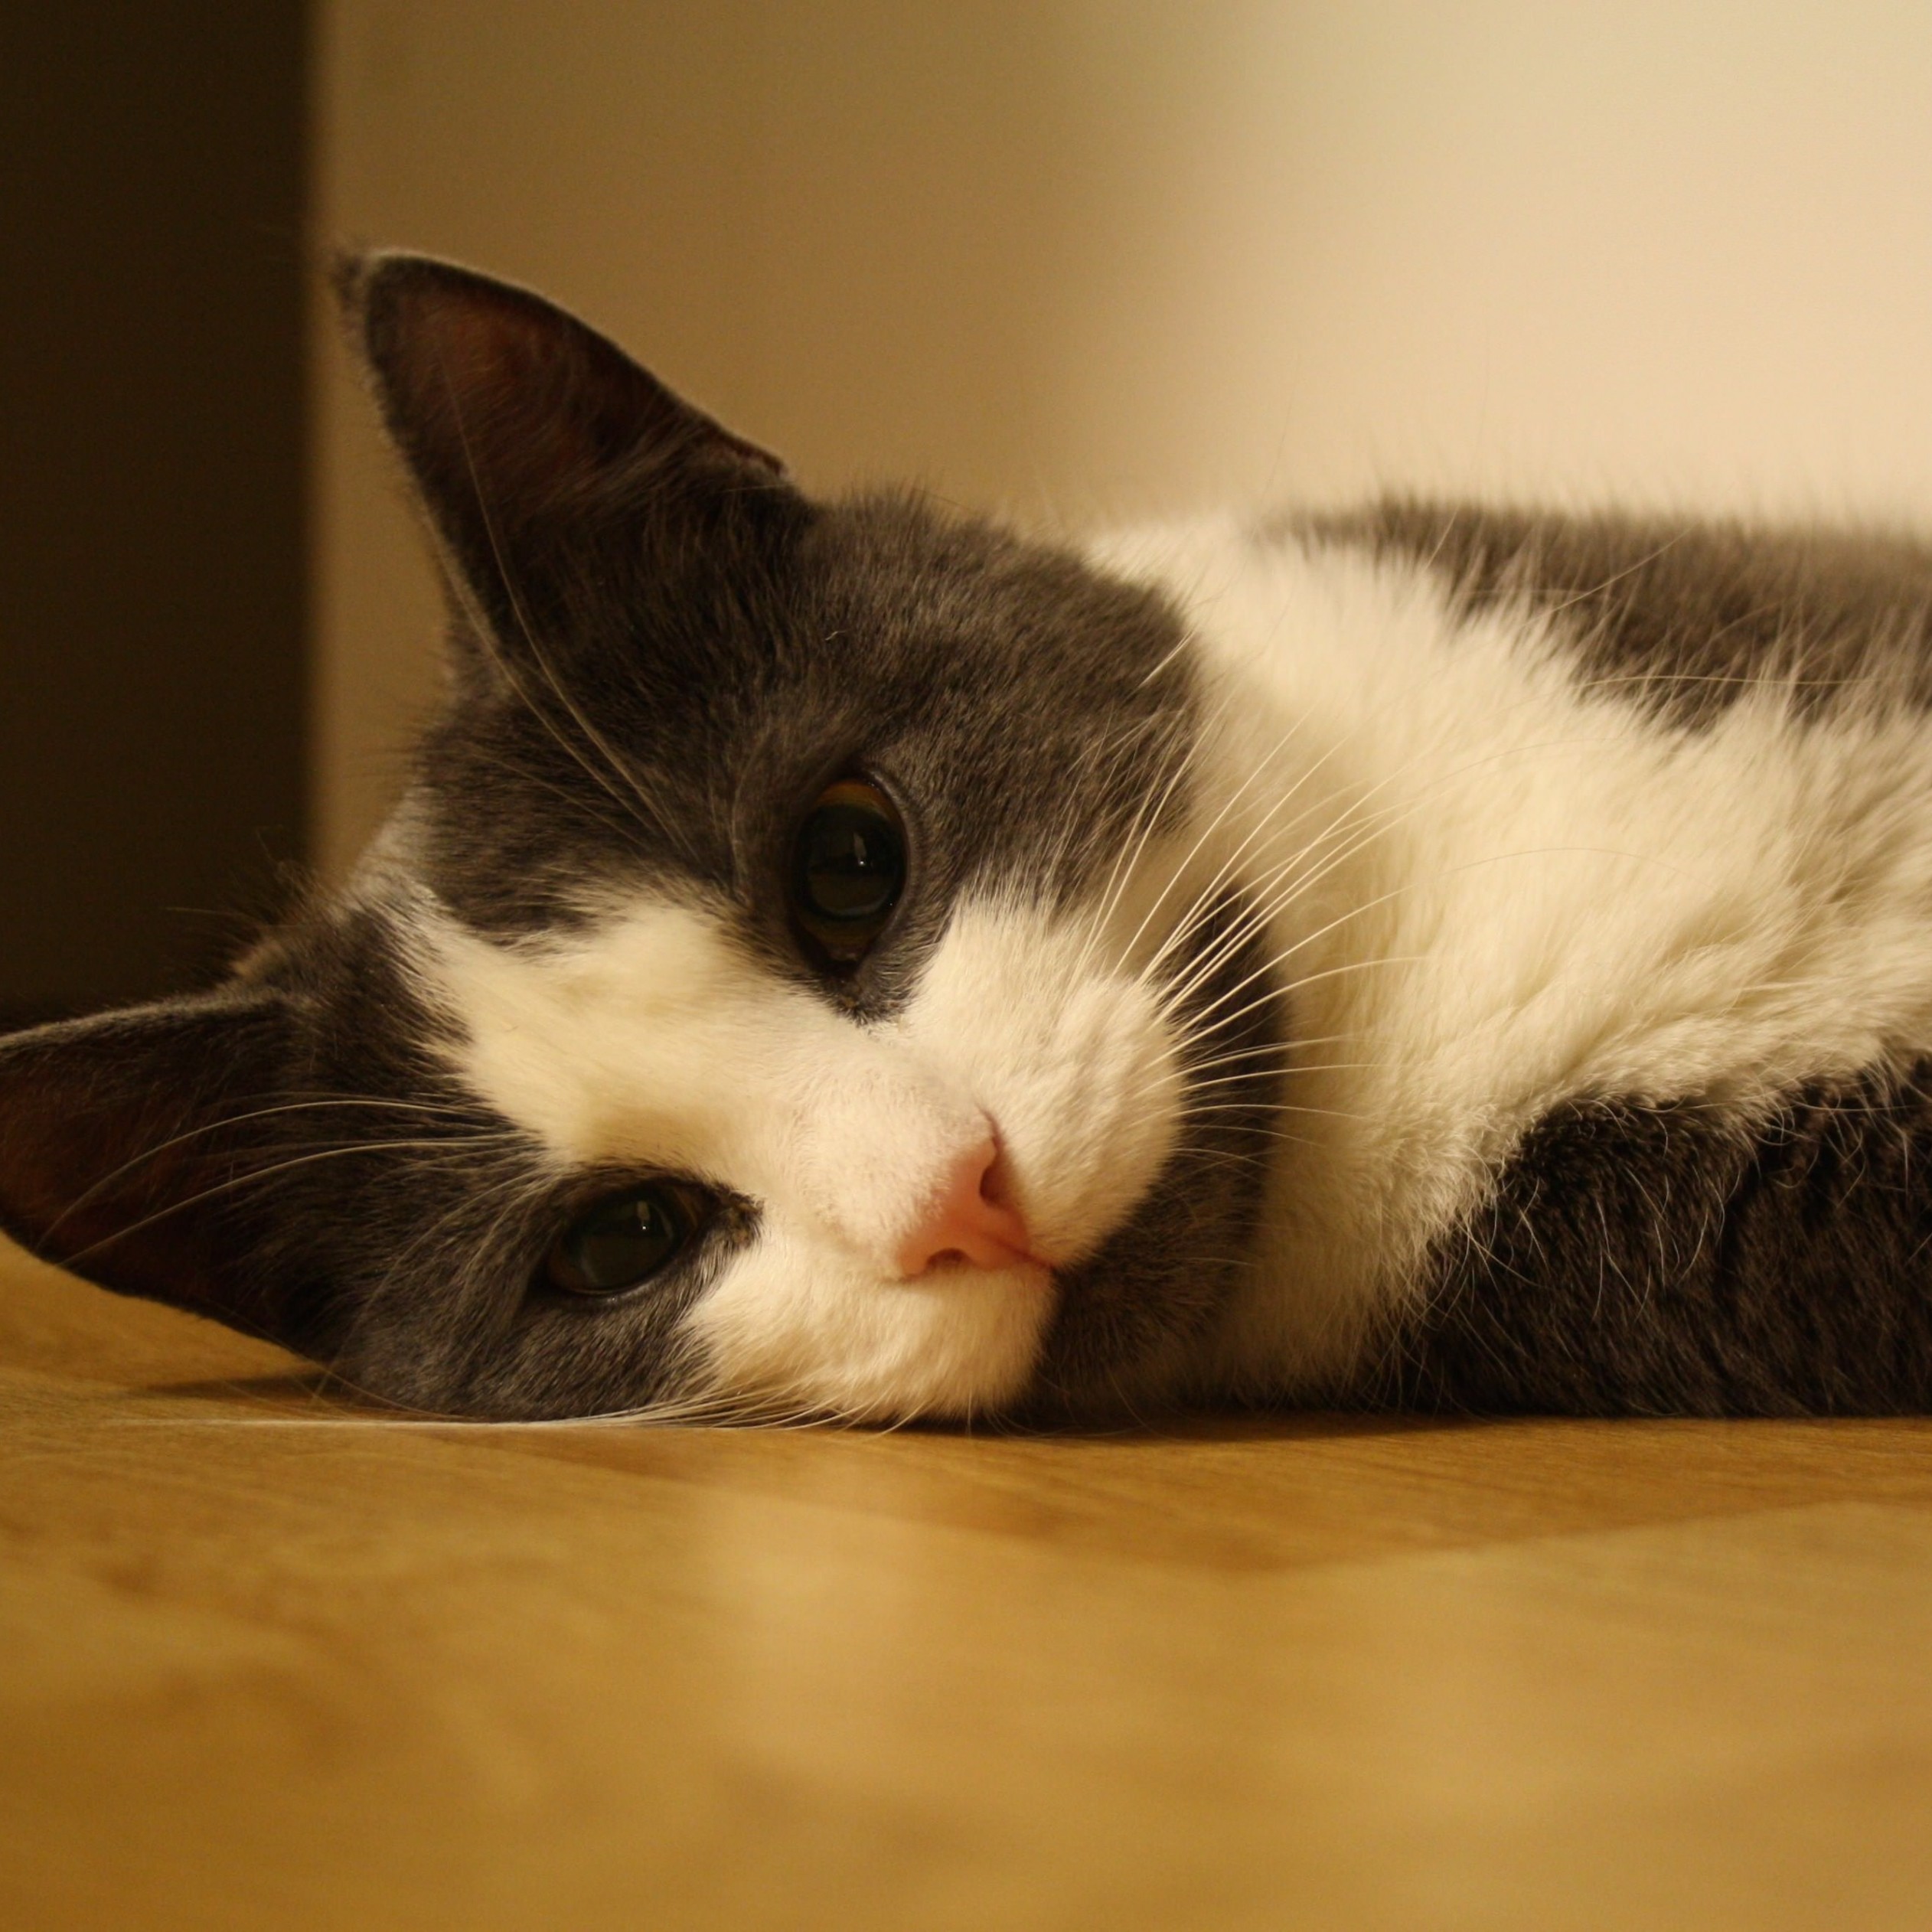 Sweet Cat Lying On The Floor Wallpaper for Apple iPad mini 2